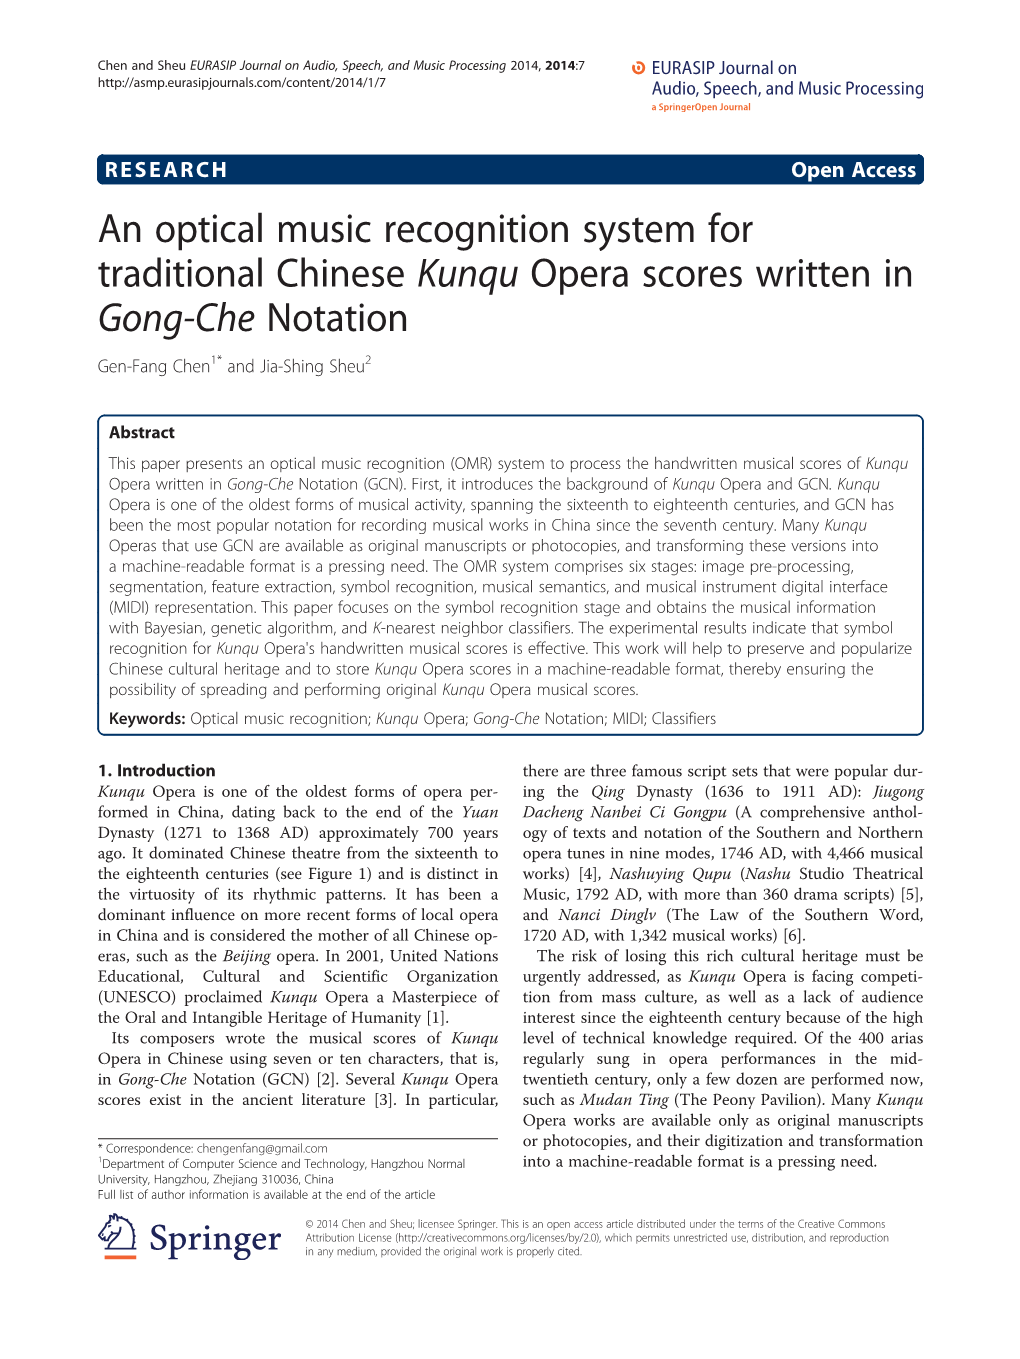 An Optical Music Recognition System for Traditional Chinese Kunqu Opera Scores Written in Gong-Che Notation Gen-Fang Chen1* and Jia-Shing Sheu2